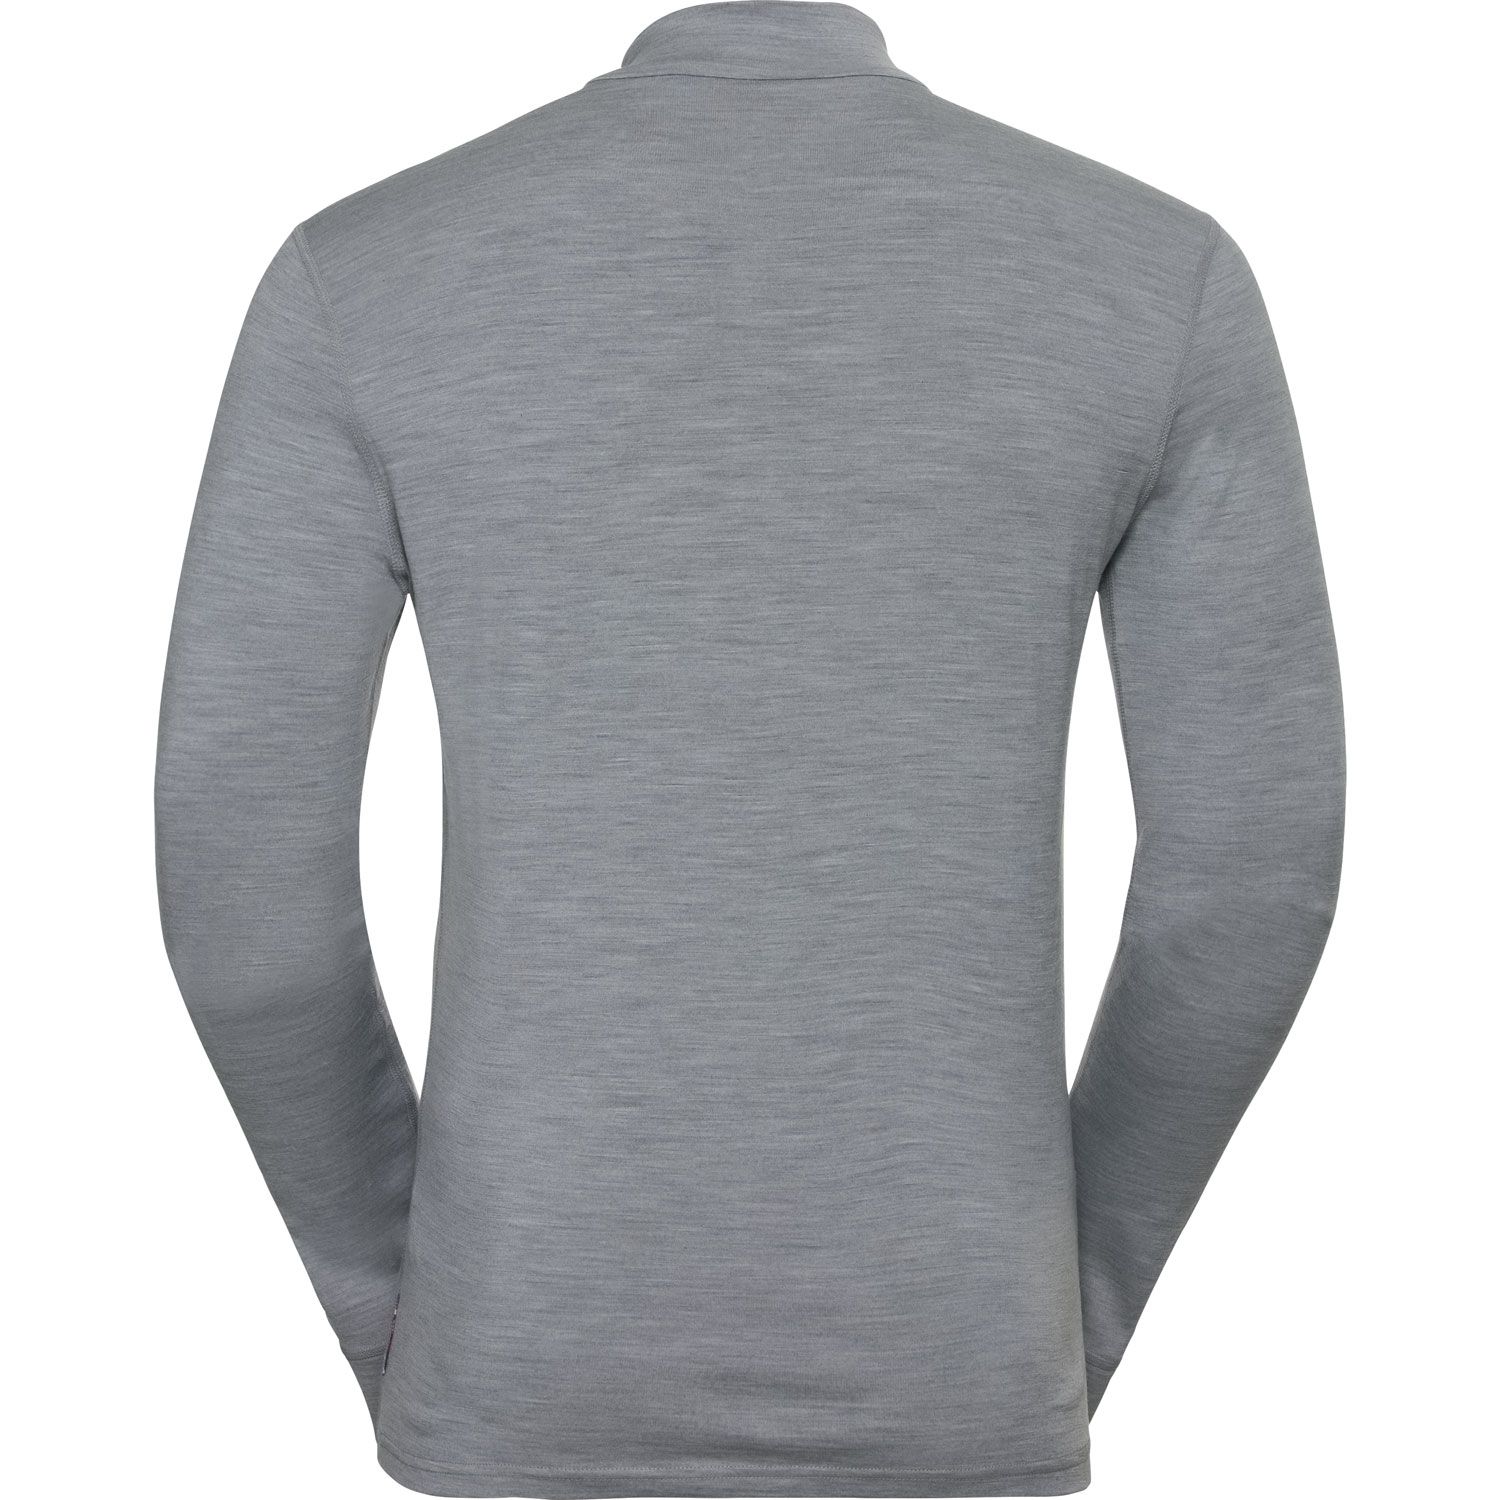 T-shirt Manches Longues 1/2 zip Natural Homme - Grey Melange 